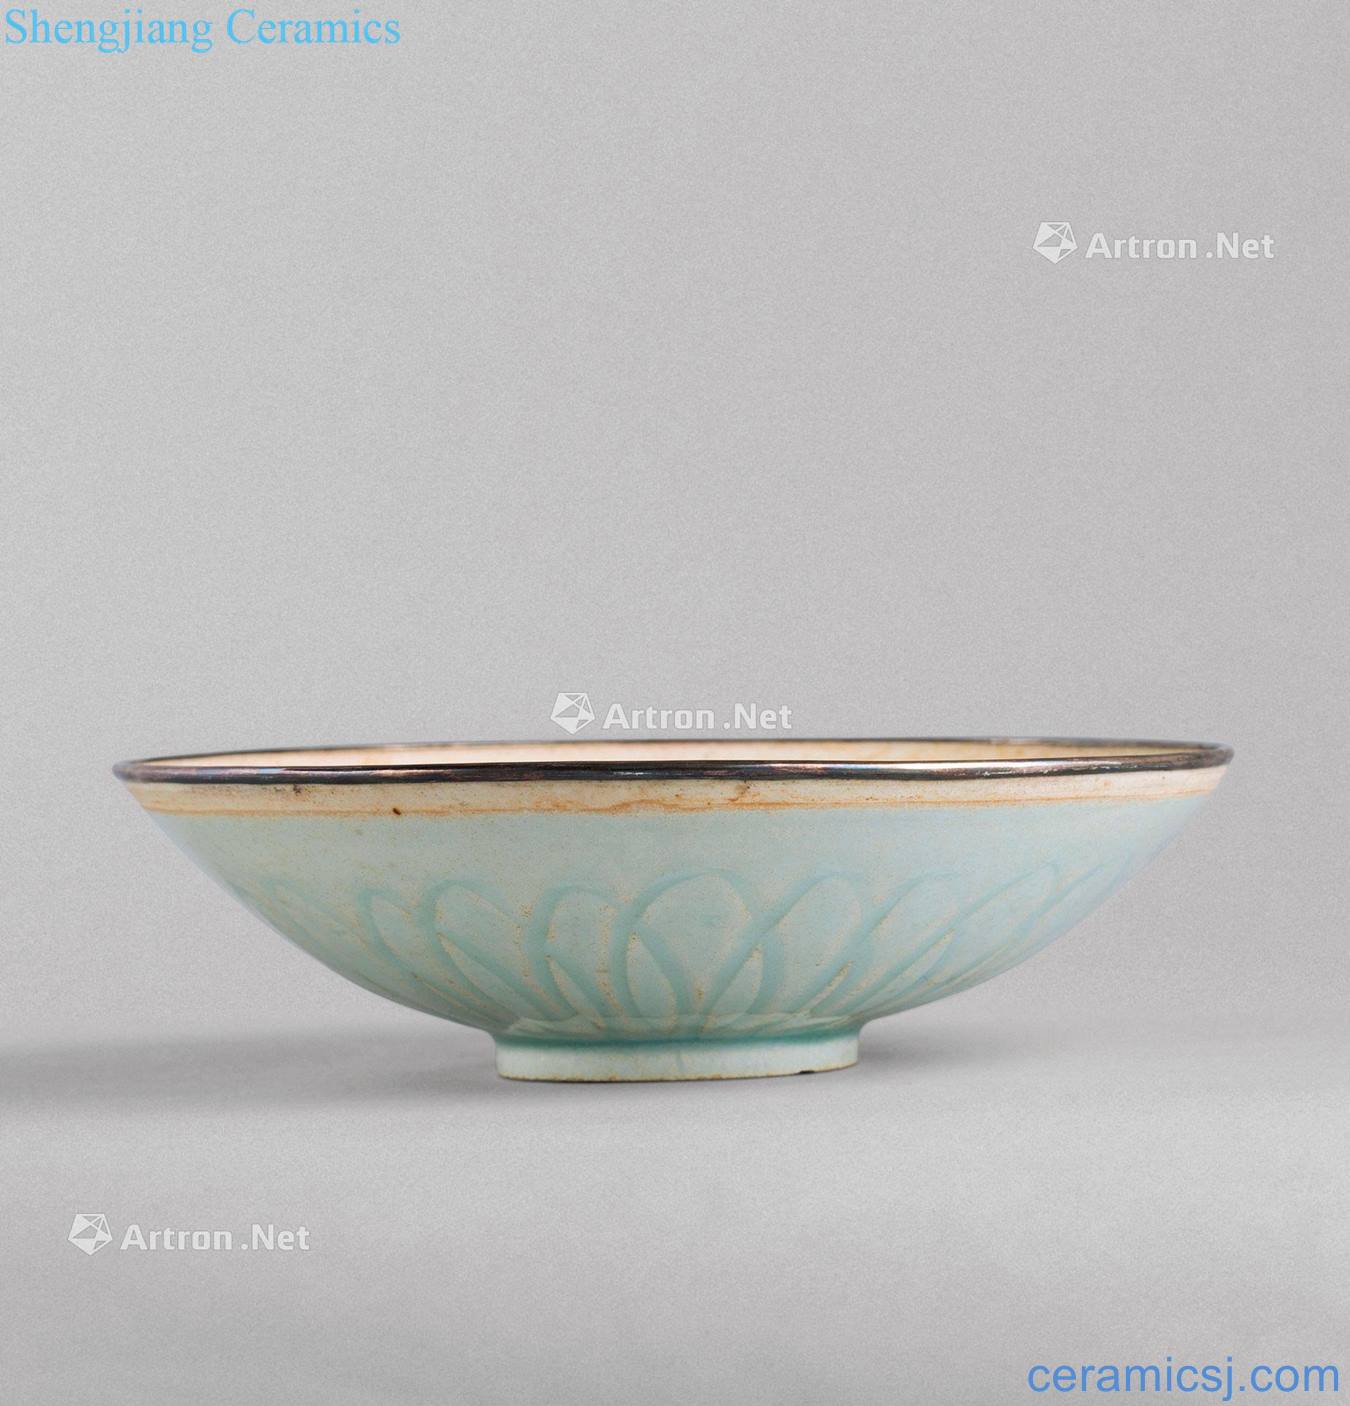 The song dynasty violet disc green-splashed bowls